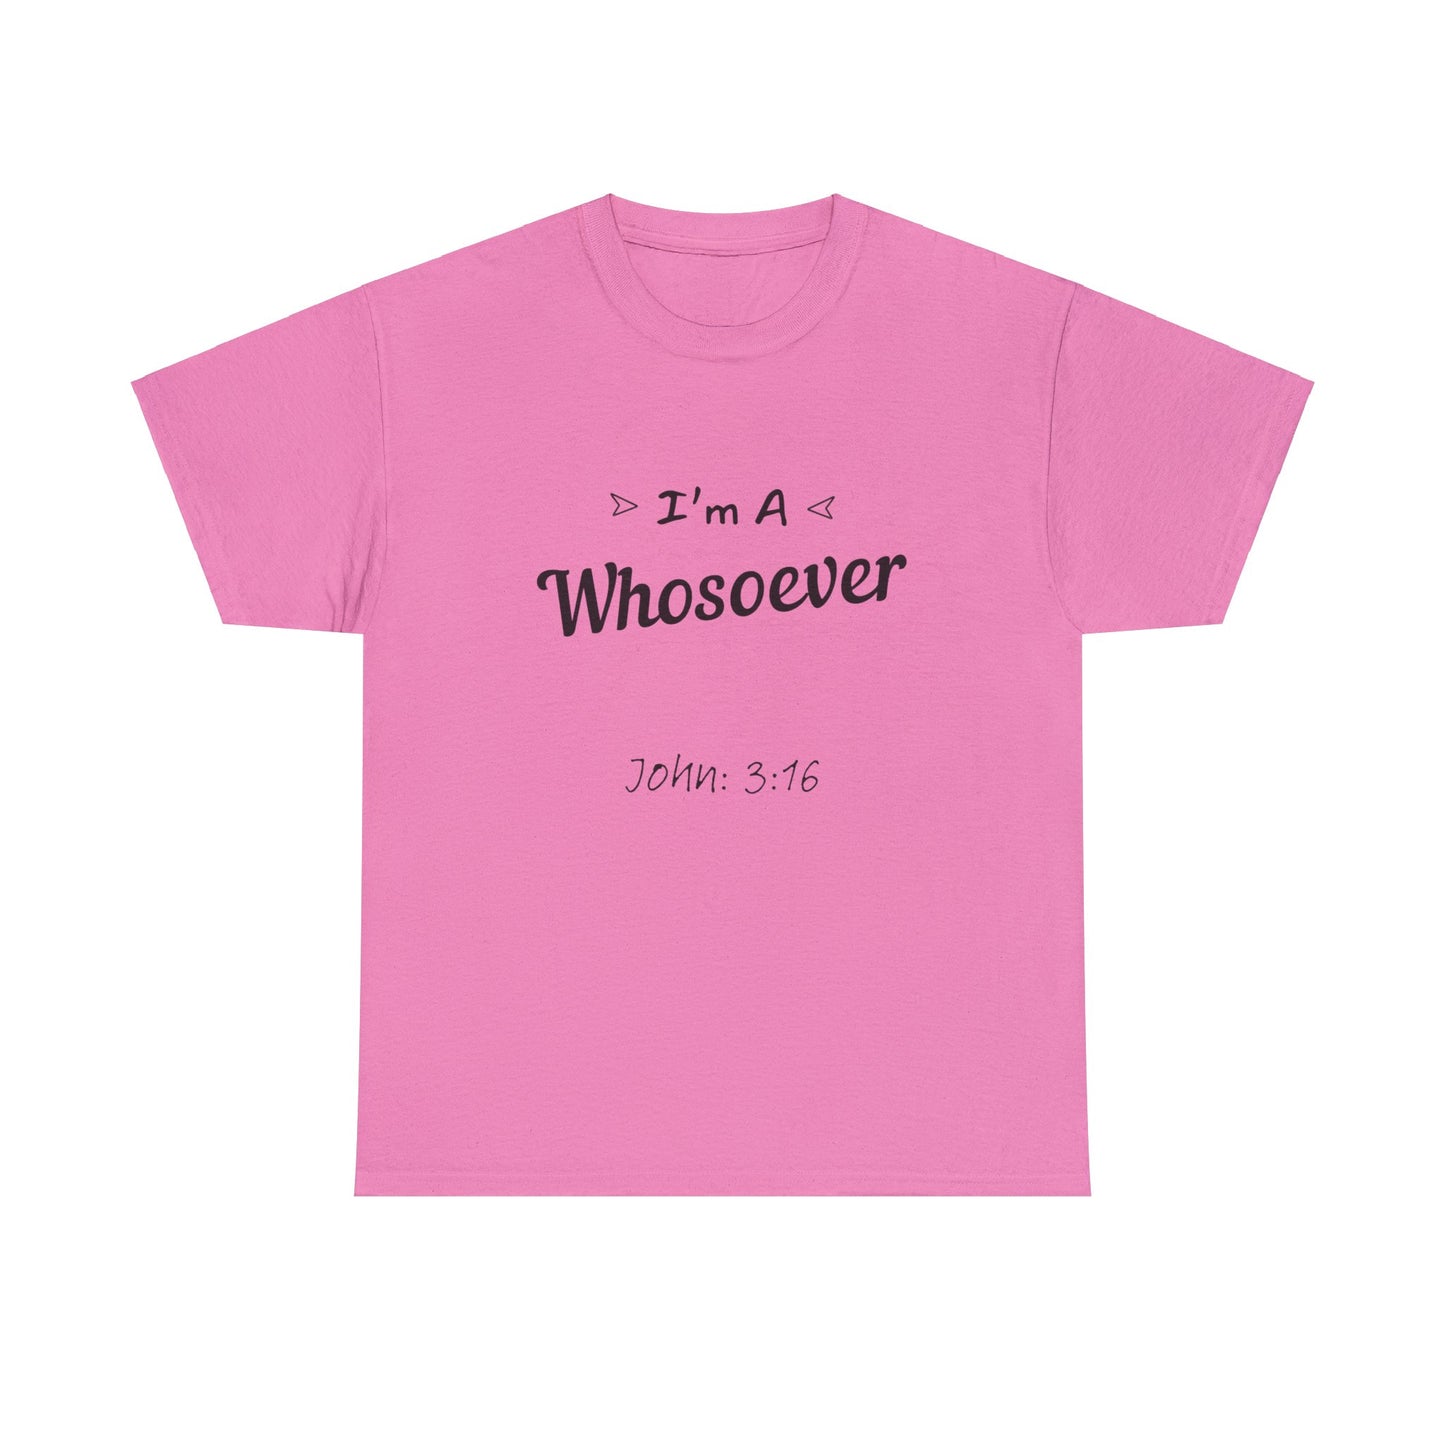 "Unisex cotton 'I'm a Whosoever' T-shirt reflecting John 3:16 verse."